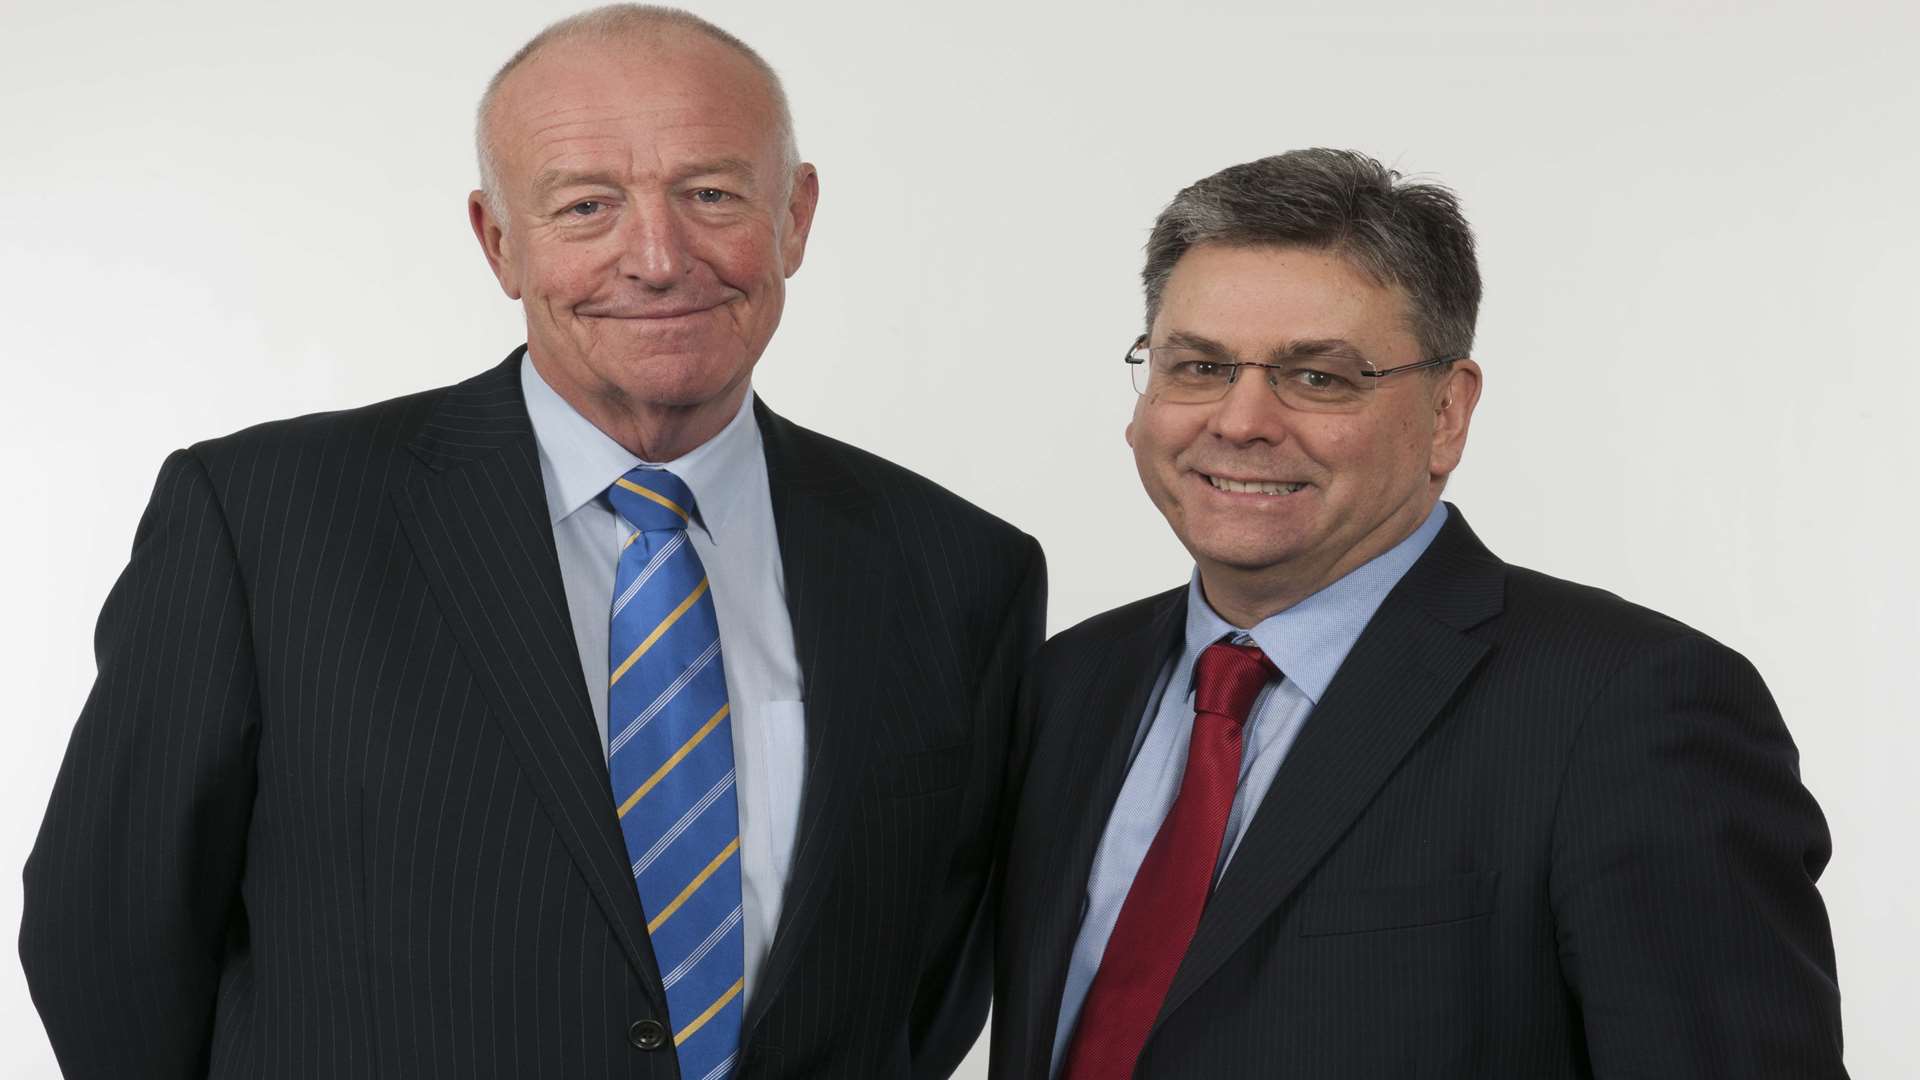 Kreston International chief executive Jon Lisby, left, and Clive Stevens, executive chairman of Kreston Reeves